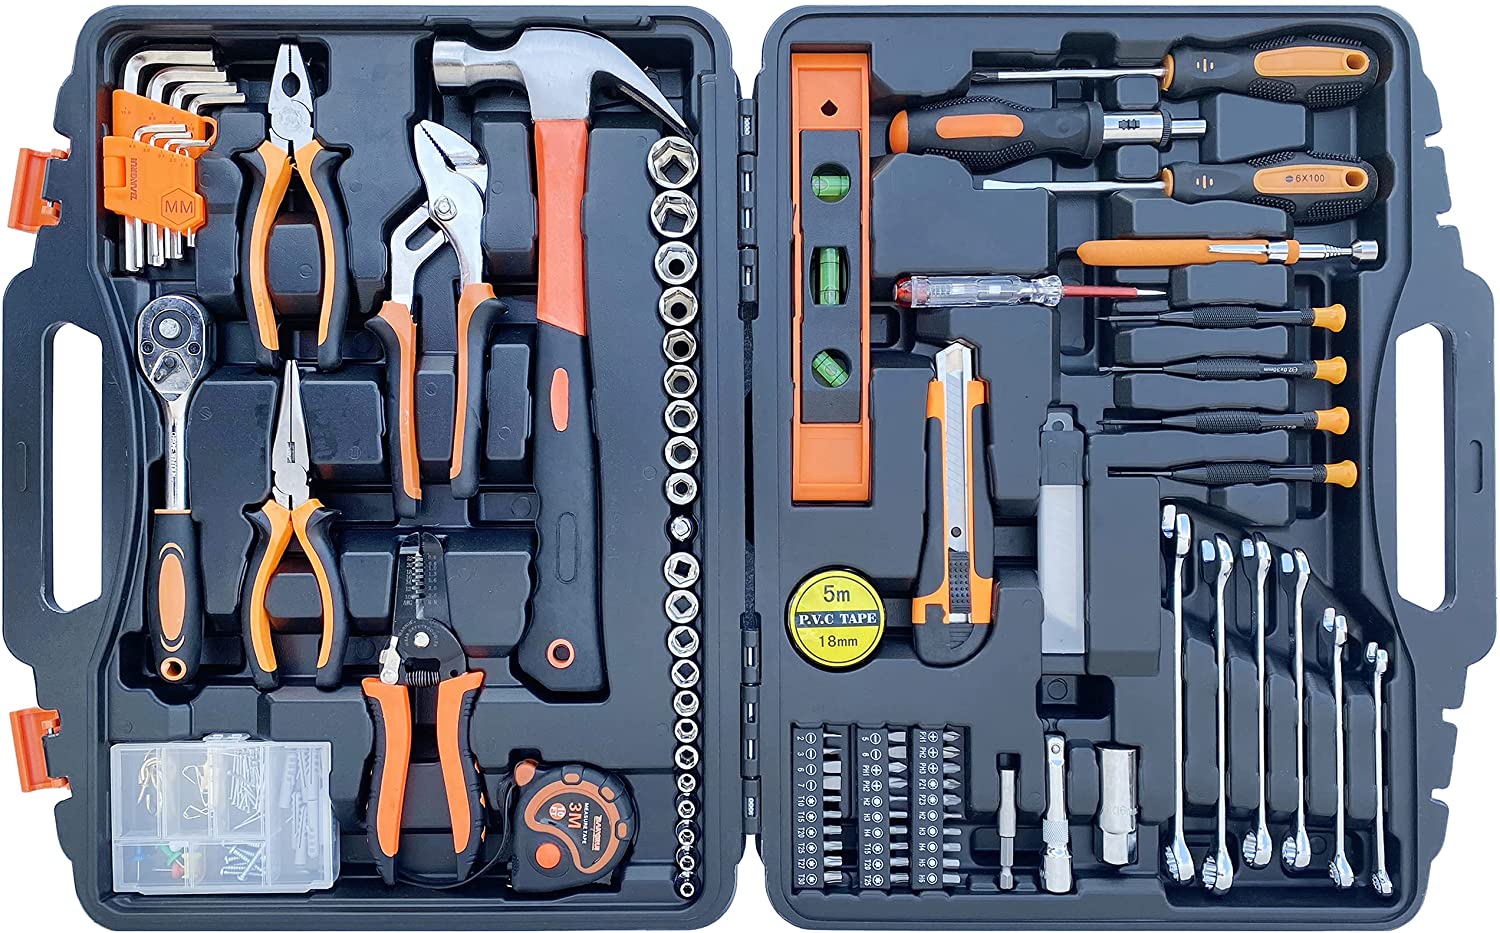 Bangrui 330-Piece Tool Set - General Household Hand Tool Kit with